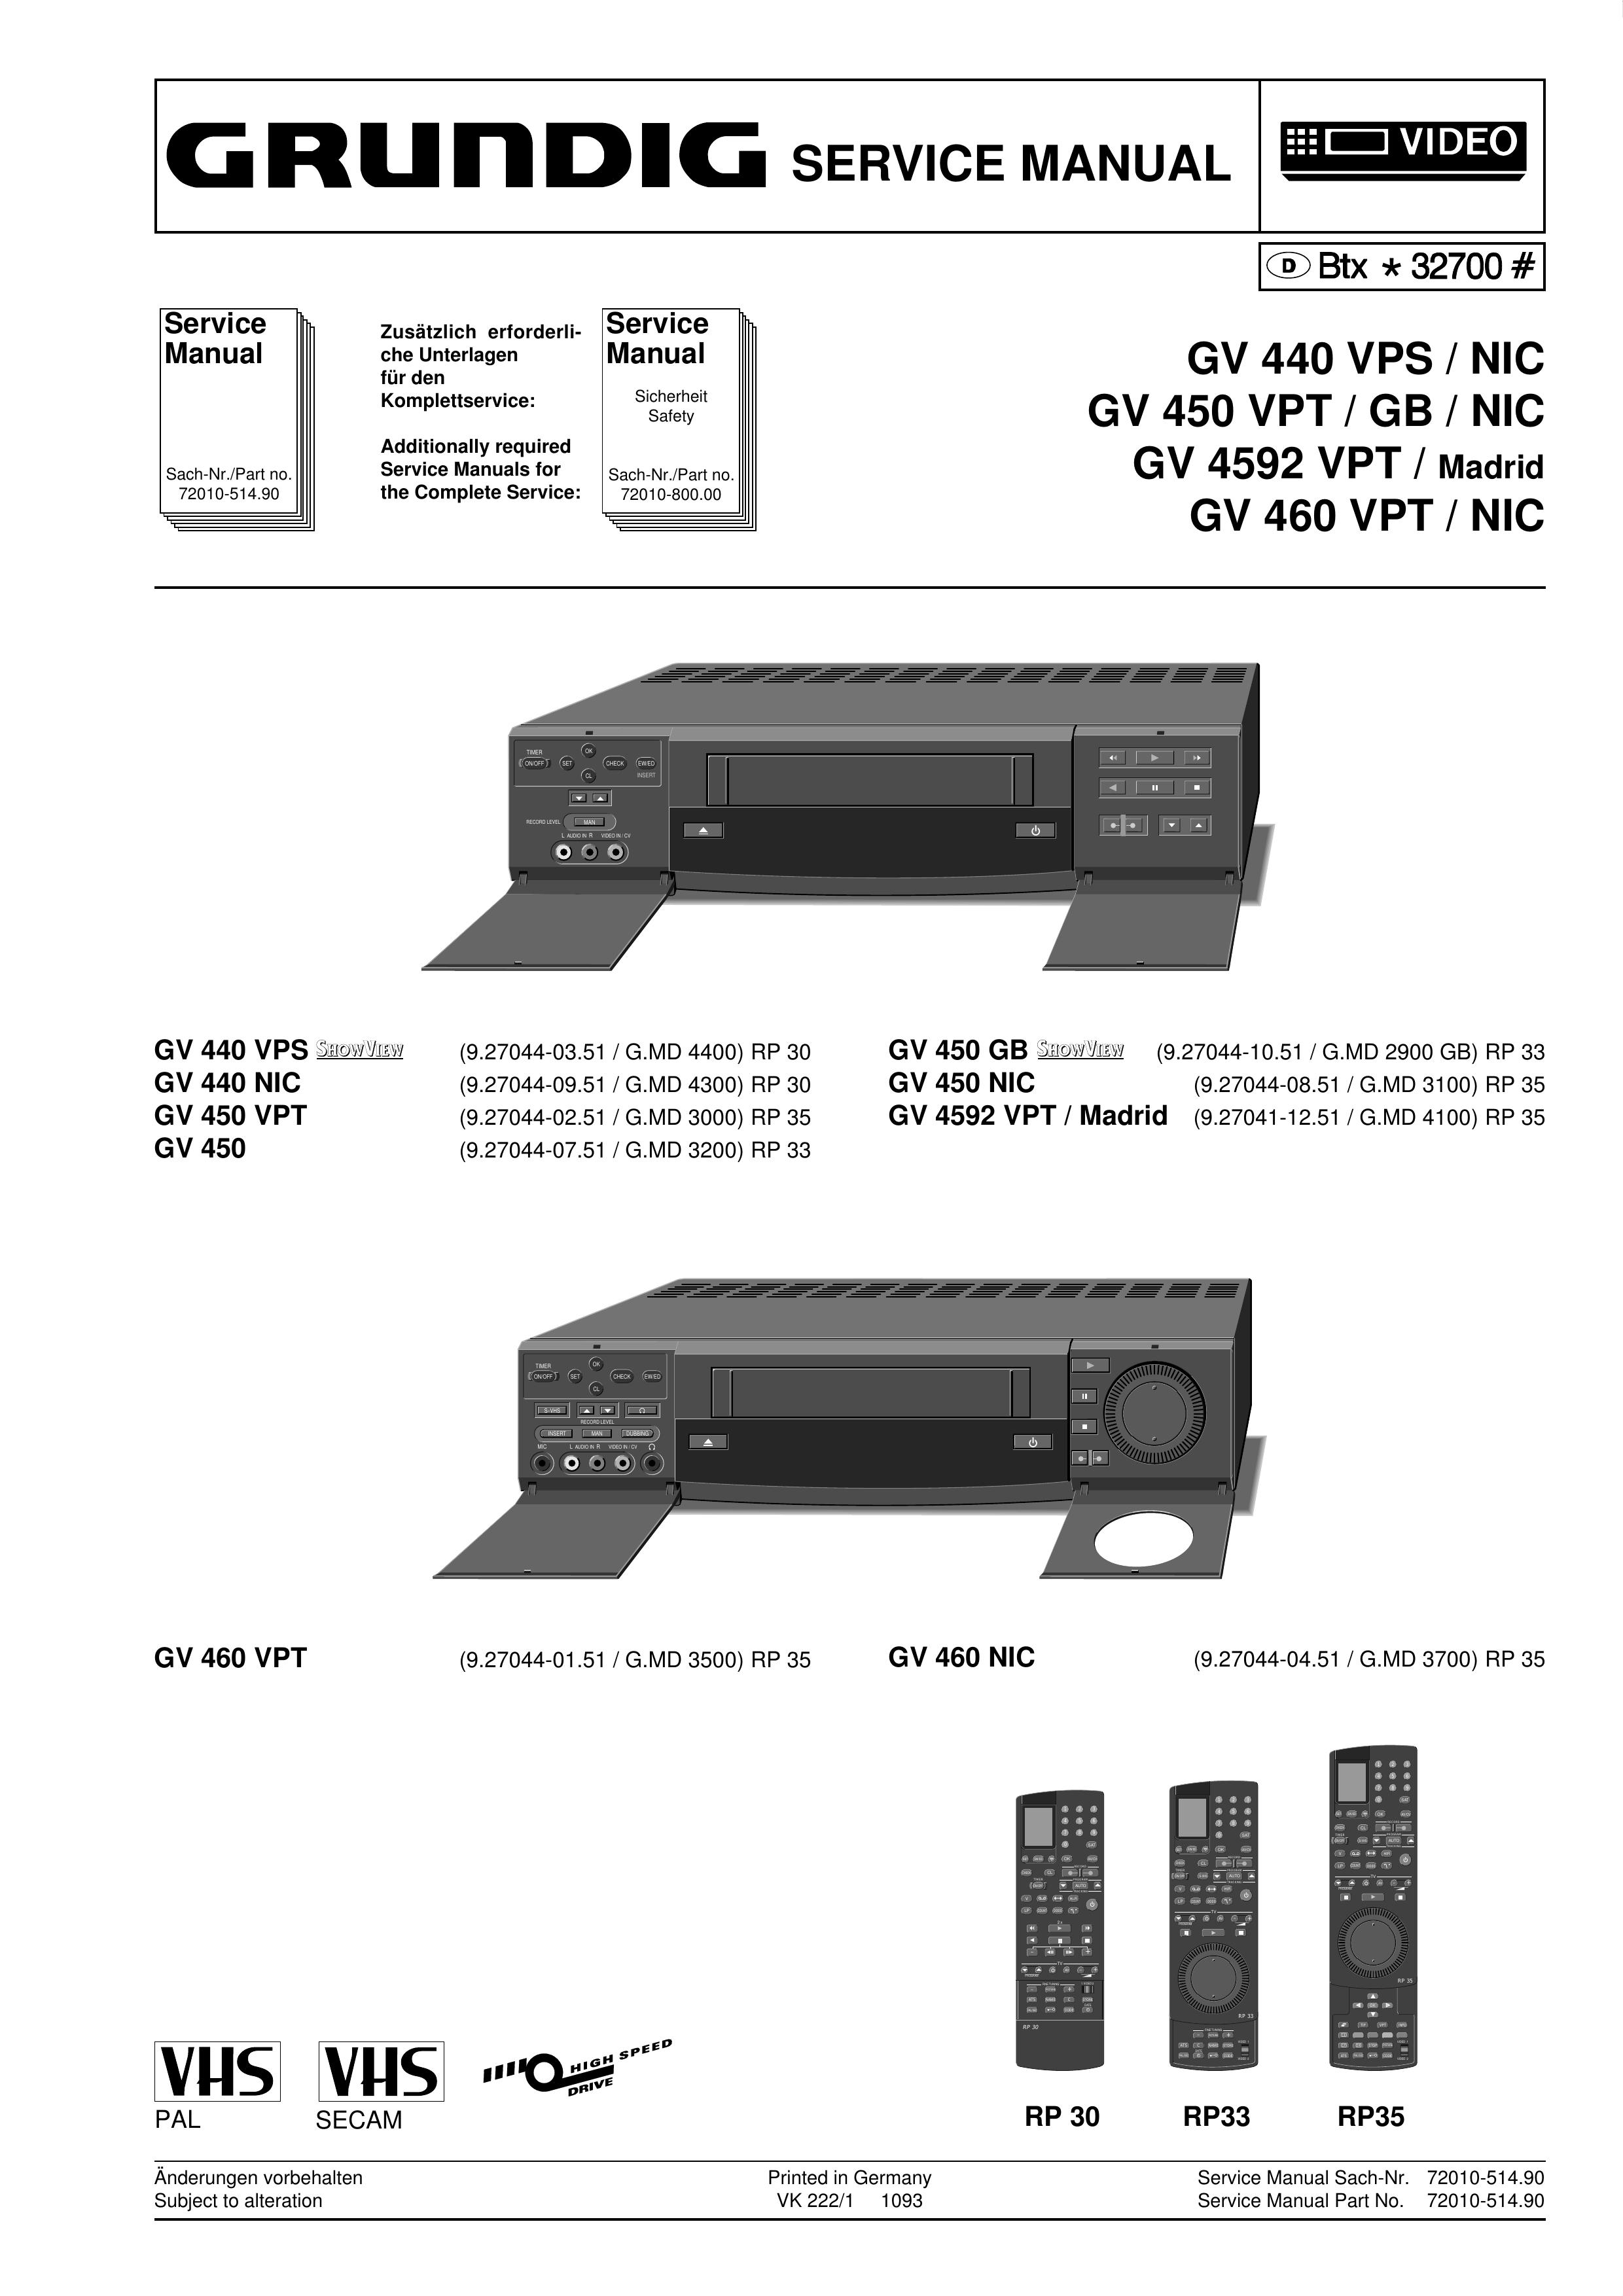 Grundig GV 460 VPT / NIC Camcorder User Manual